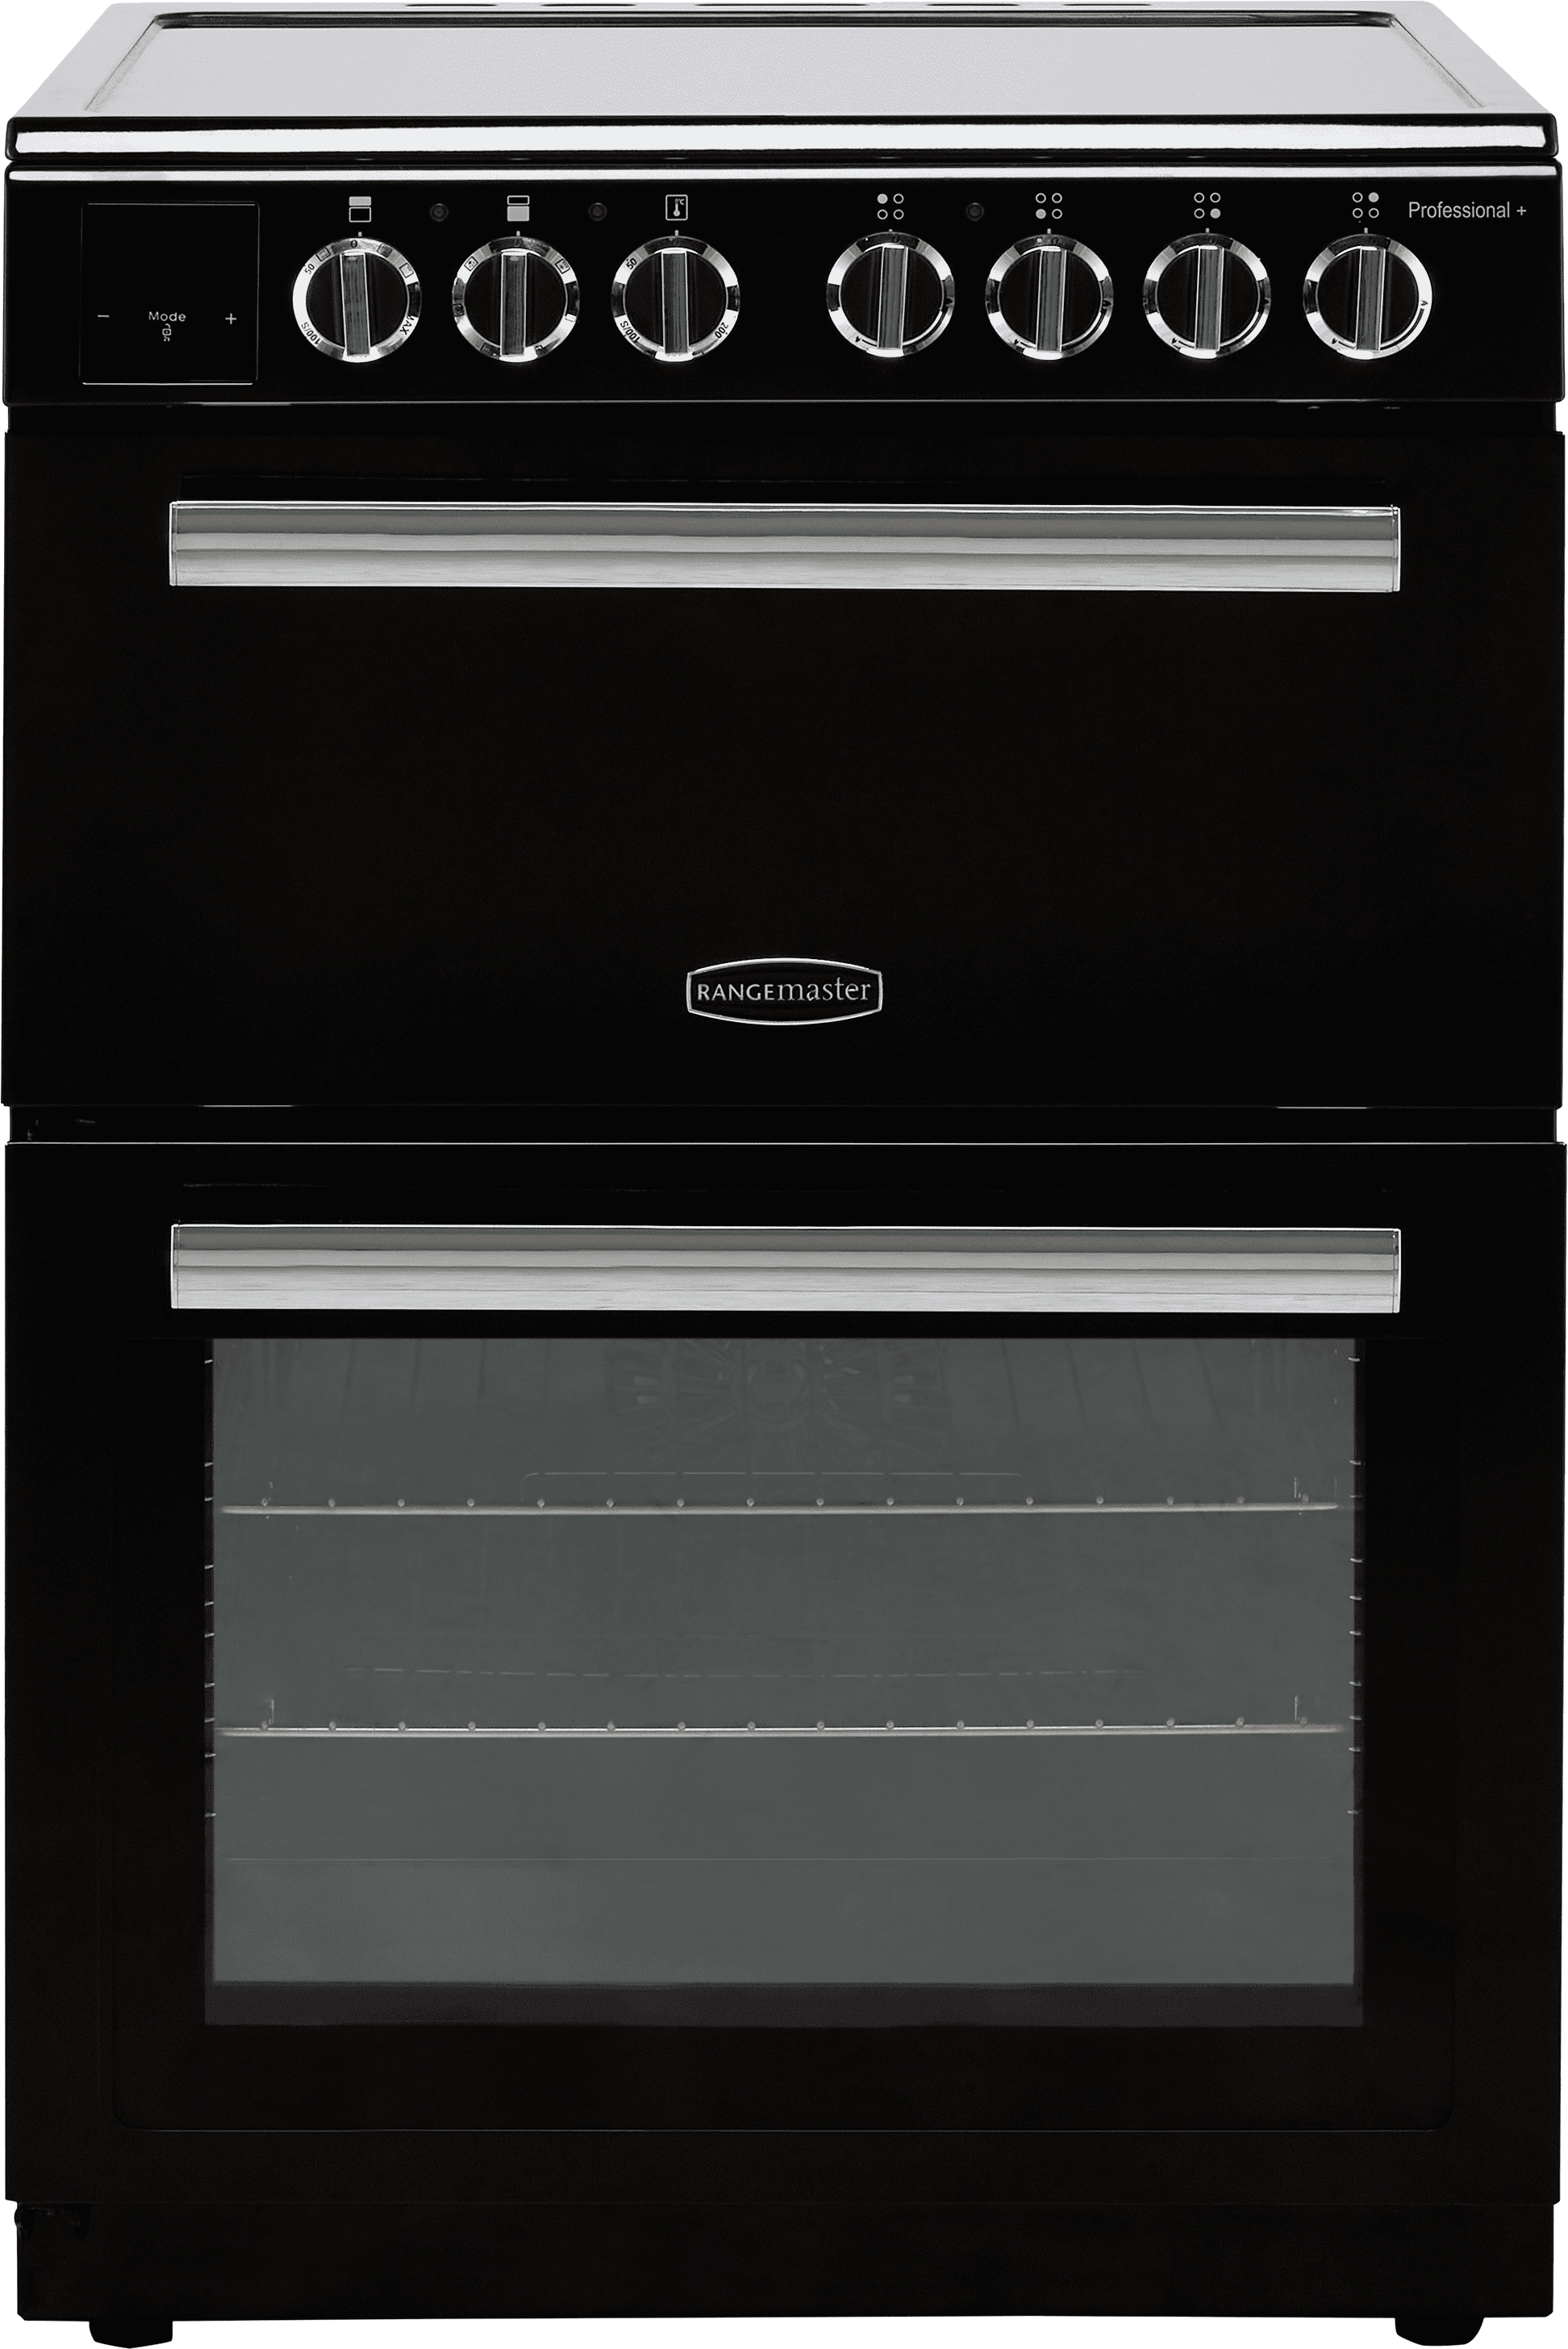 Rangemaster Professional Plus 60 PROPL60ECBL/C 60cm Electric Cooker with Ceramic Hob - Black / Chrome - A/A Rated, Black